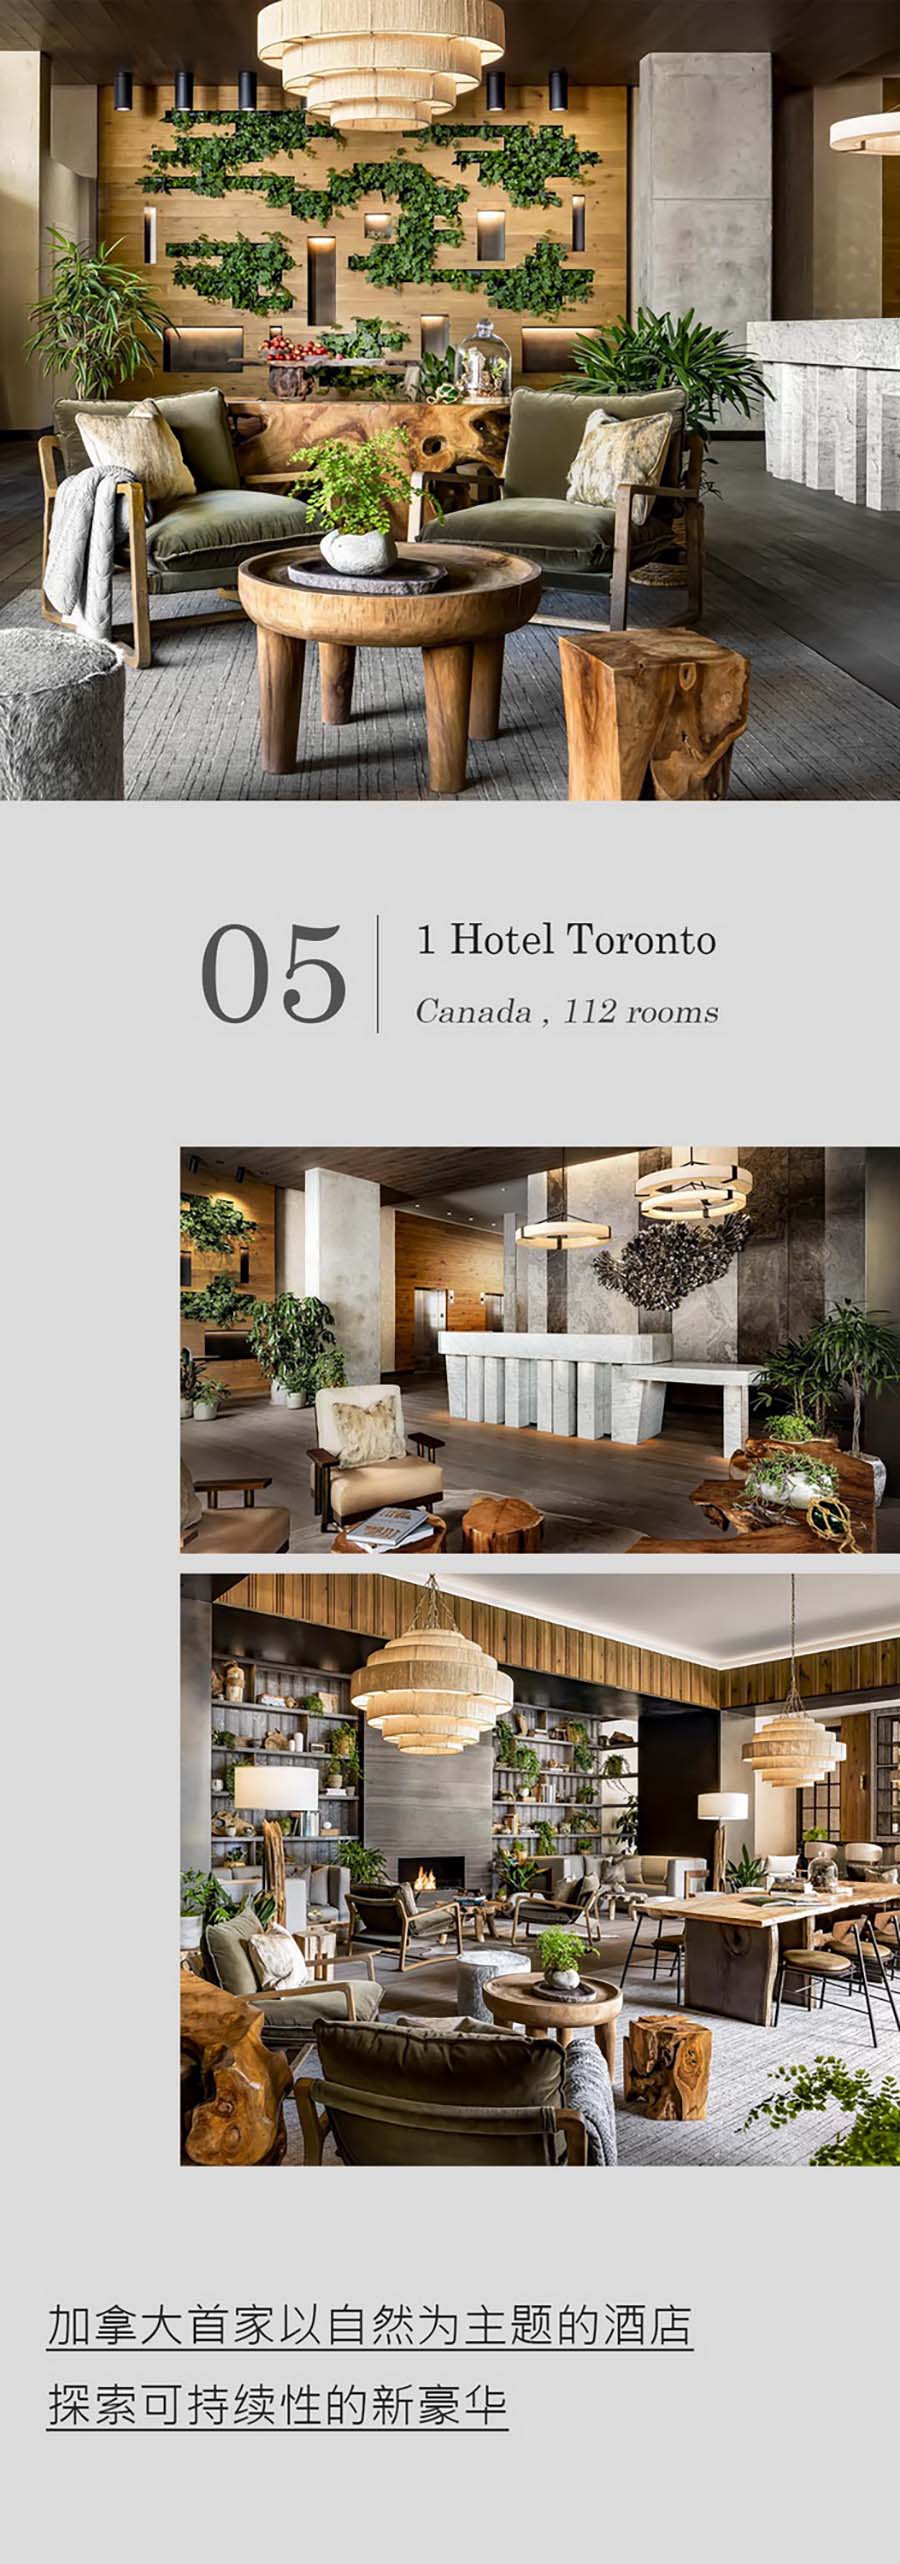 05 1 Hotel Toronto